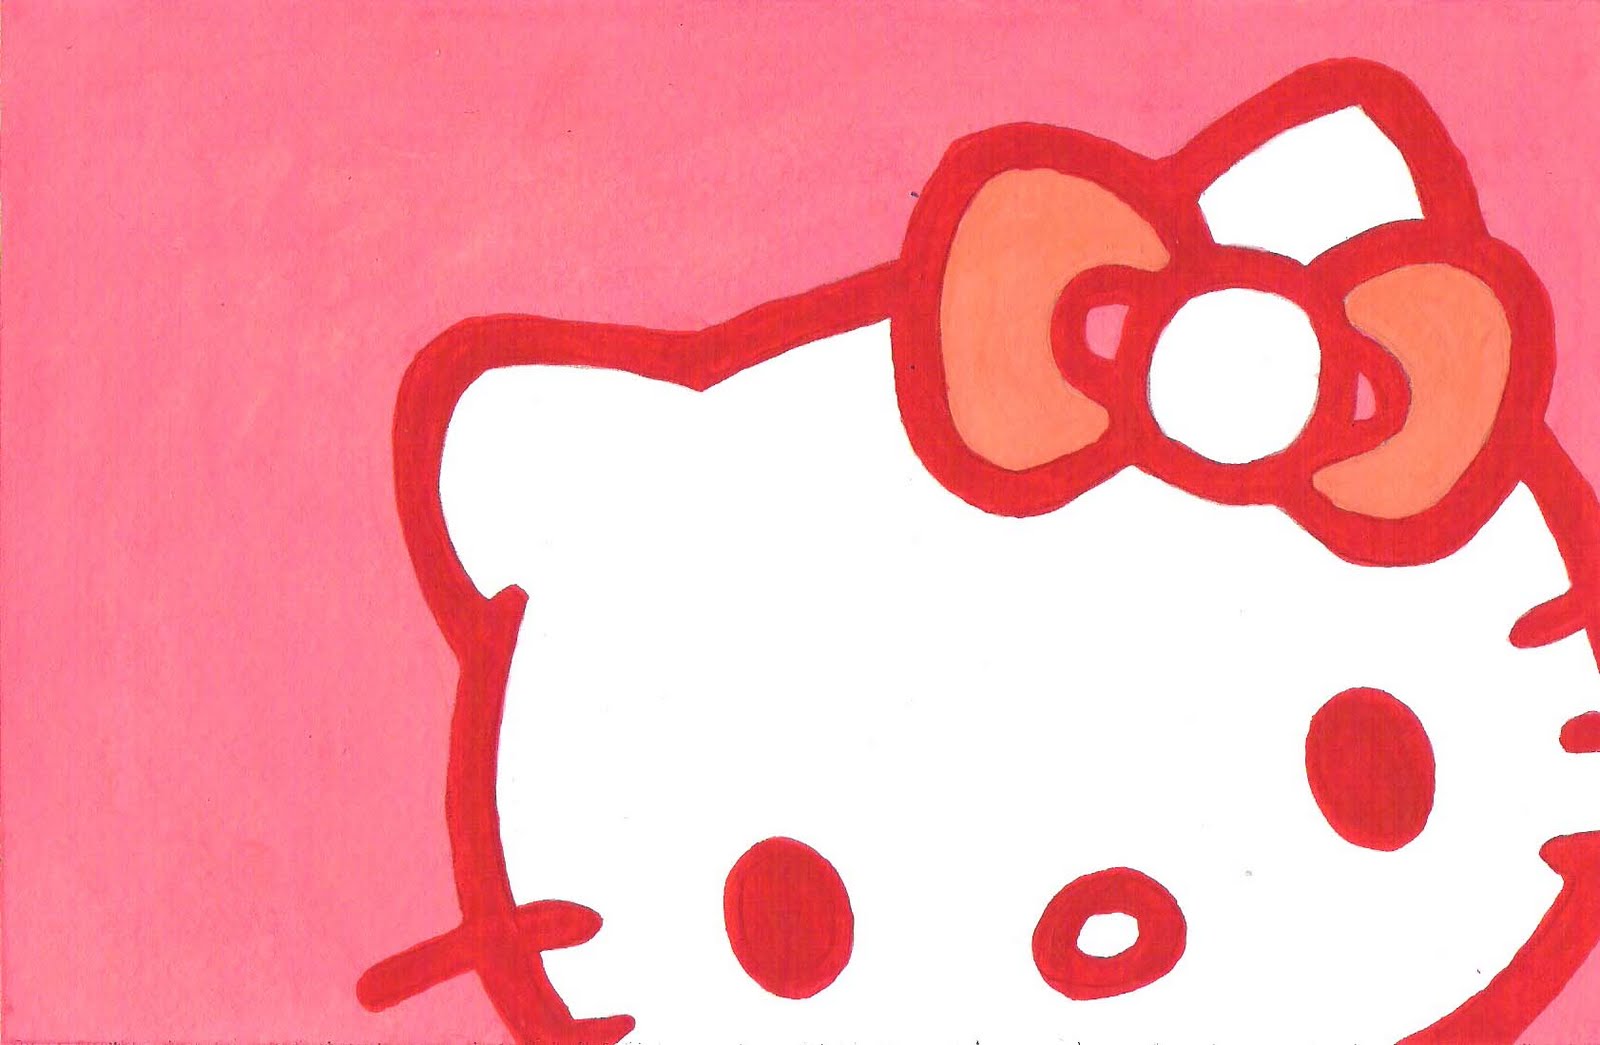 Hello Kitty HD Wallpaper In Cartoons Imageci